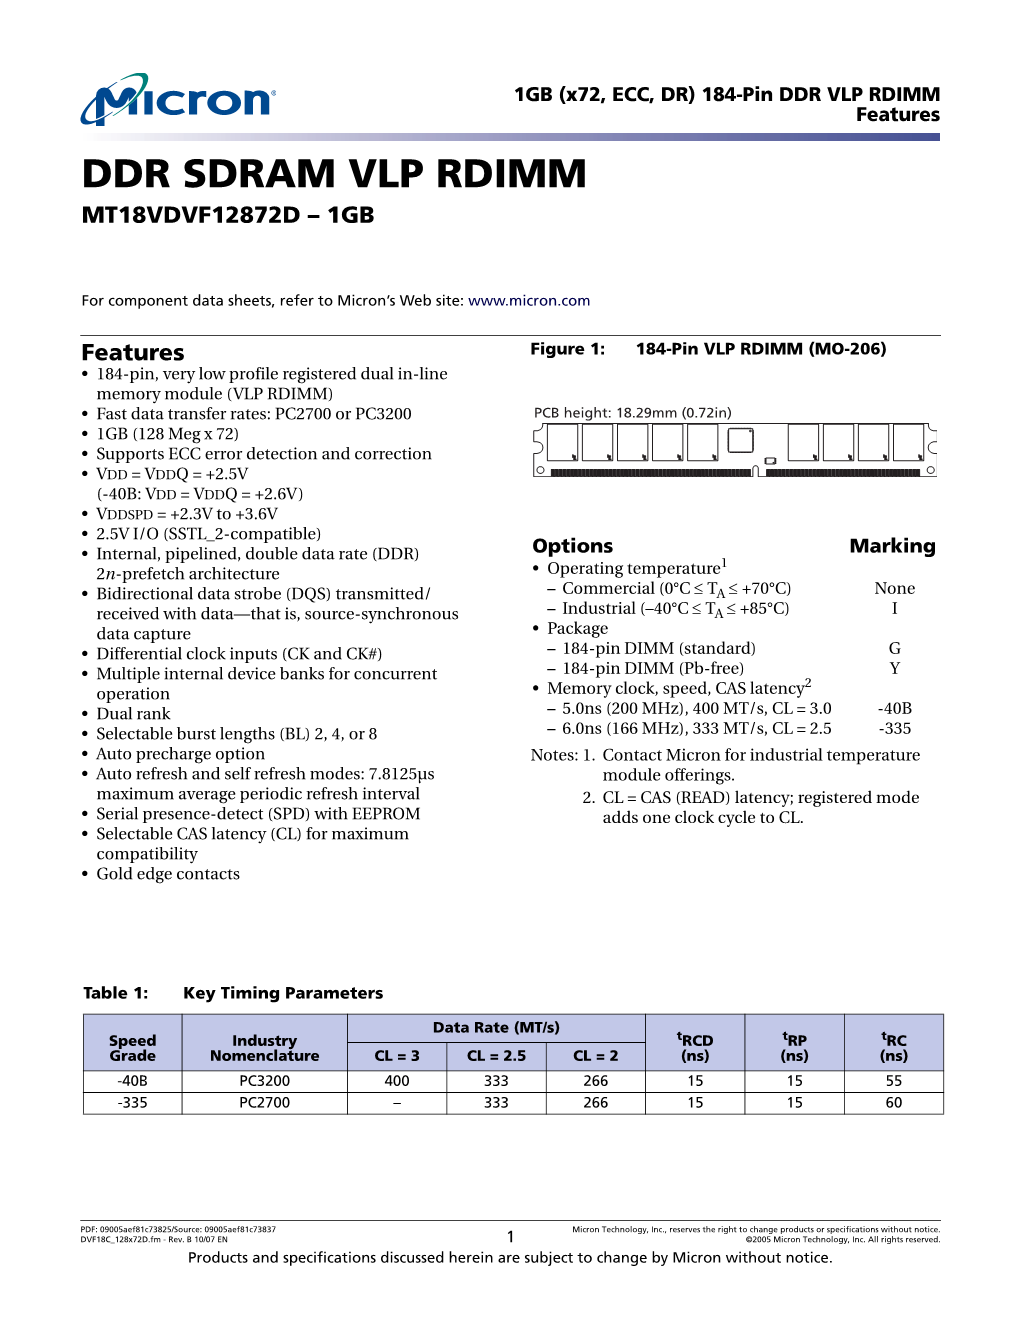 DDR SDRAM VLP RDIMM 184-Pin, 1GB X72, ECC, DR Data Sheet